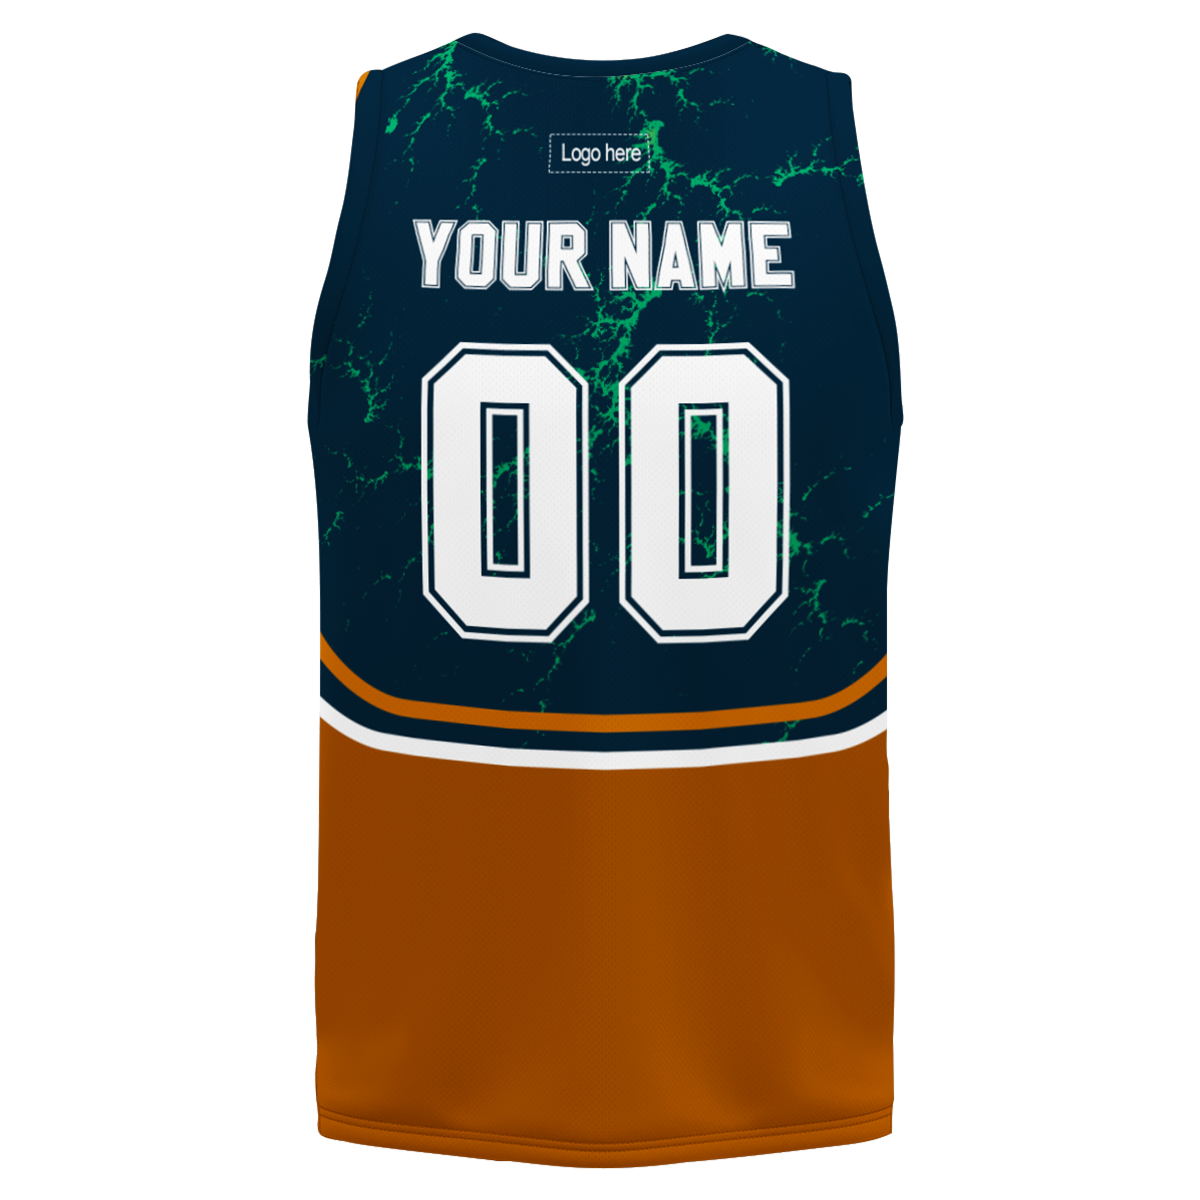 personalized-design-customized-basketball-wear-jersey-uniforms-print-on-demand-training-basketball-suits-at-cj-pod-6